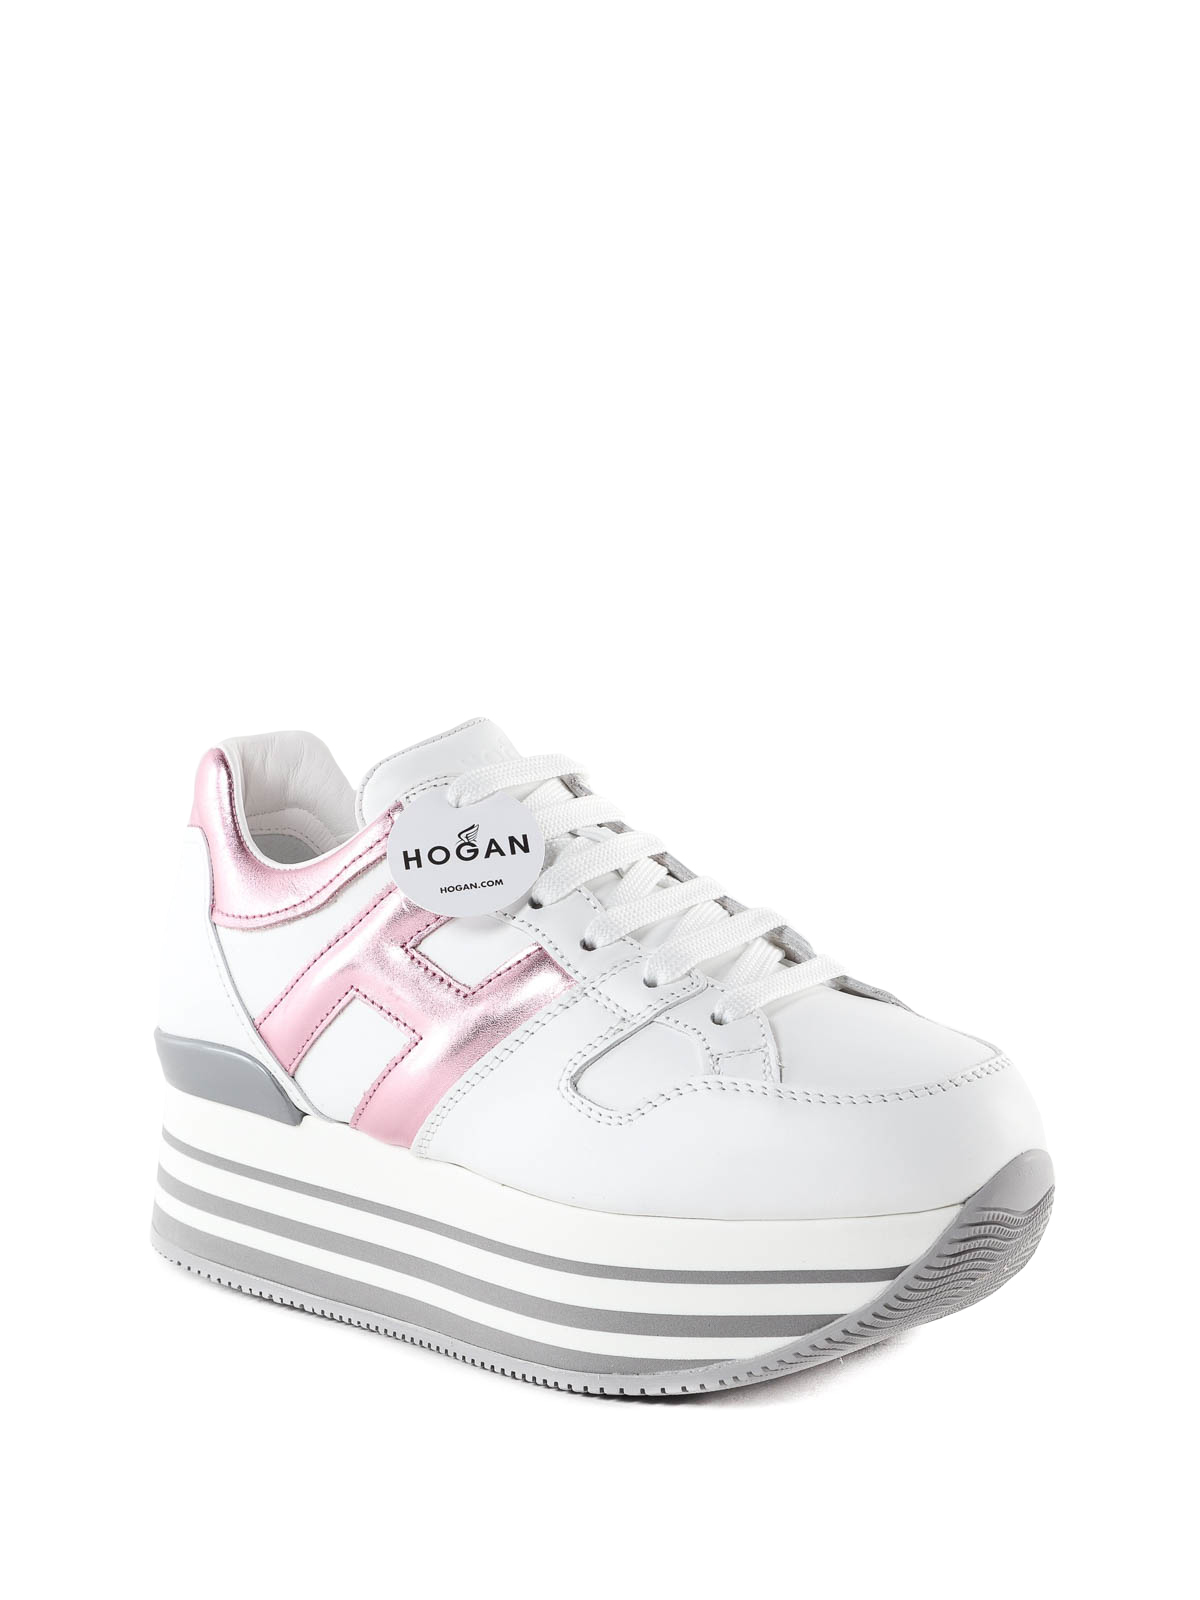 Hogan - Sneaker Maxi H222 bianca e rosa in pelle - sneakers -  HXW2830T548I6W0XVW